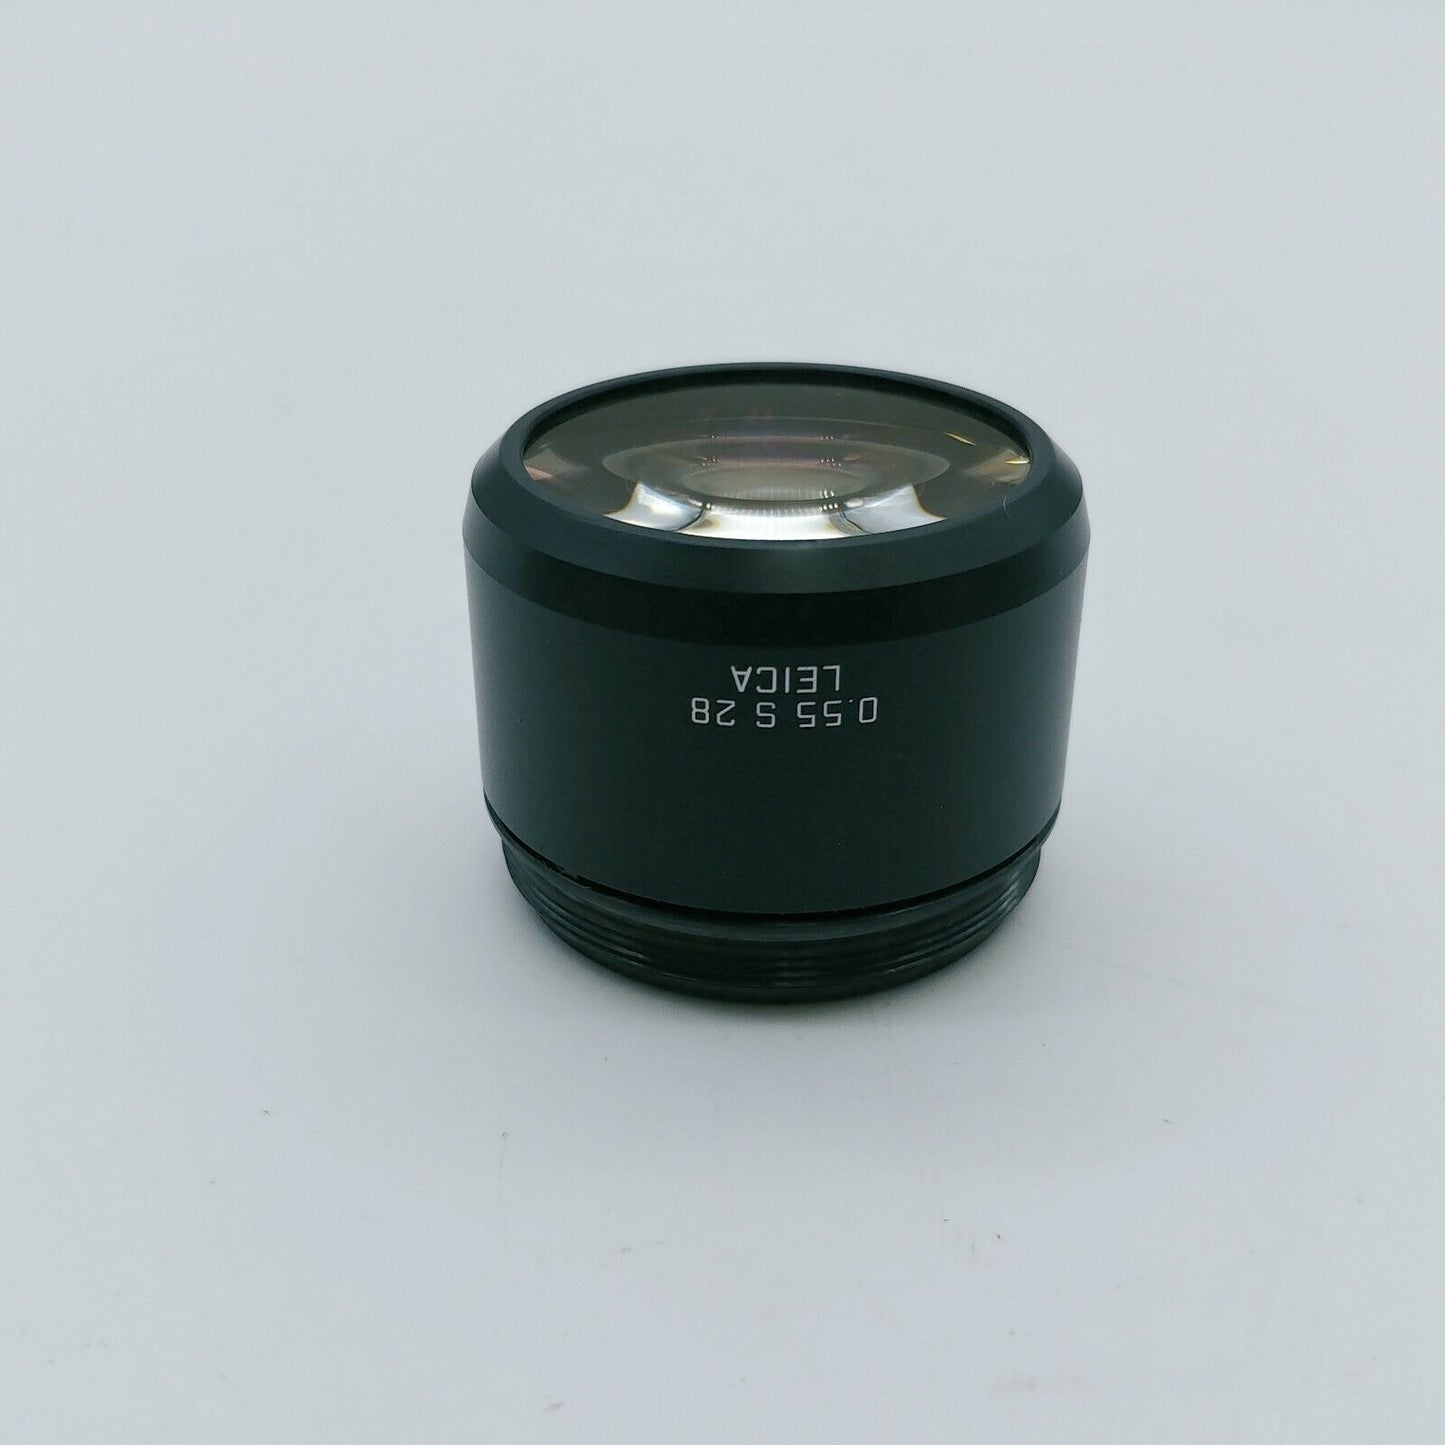 Leica Microscope Condenser Head Lens 0.55 S 28 Article No. 505234 - microscopemarketplace